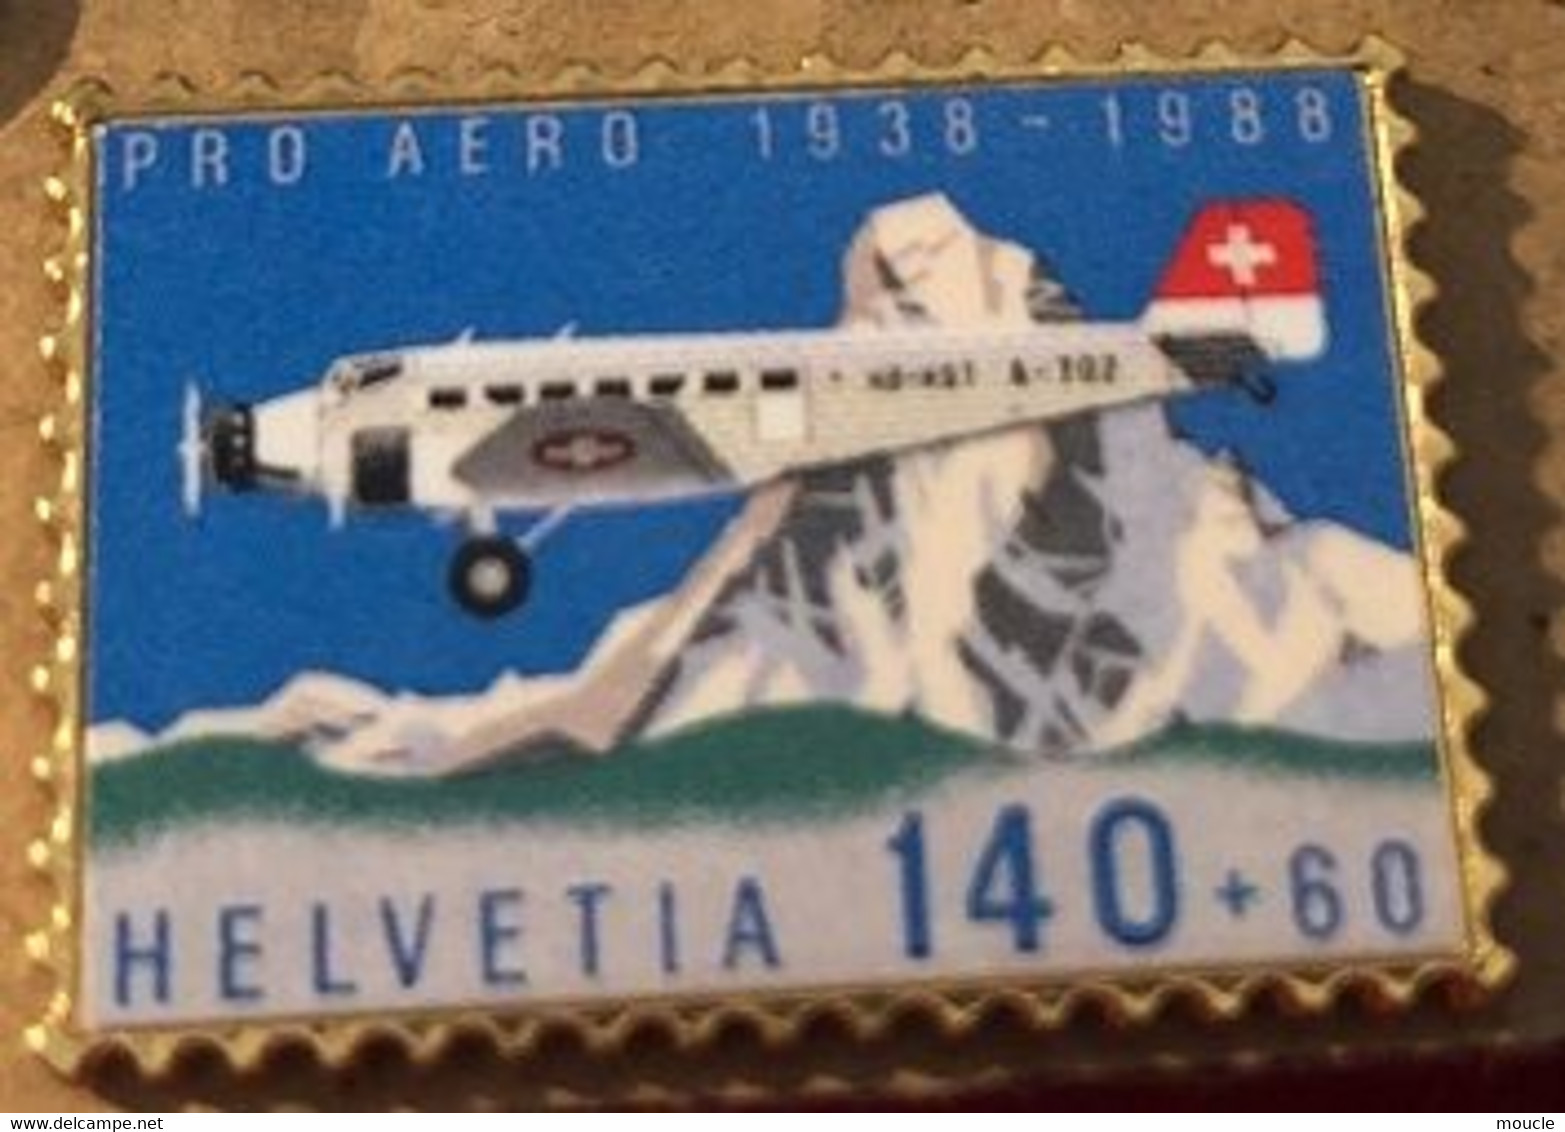 AVION - PLANE - FLUGZEUG - AEREO - HELVETIA 140+60 - CERVIN - PRO AERO 1938/1988  - SUISSE - SCHWEIZ -SWITZERLAND-(BLEU) - Aviones